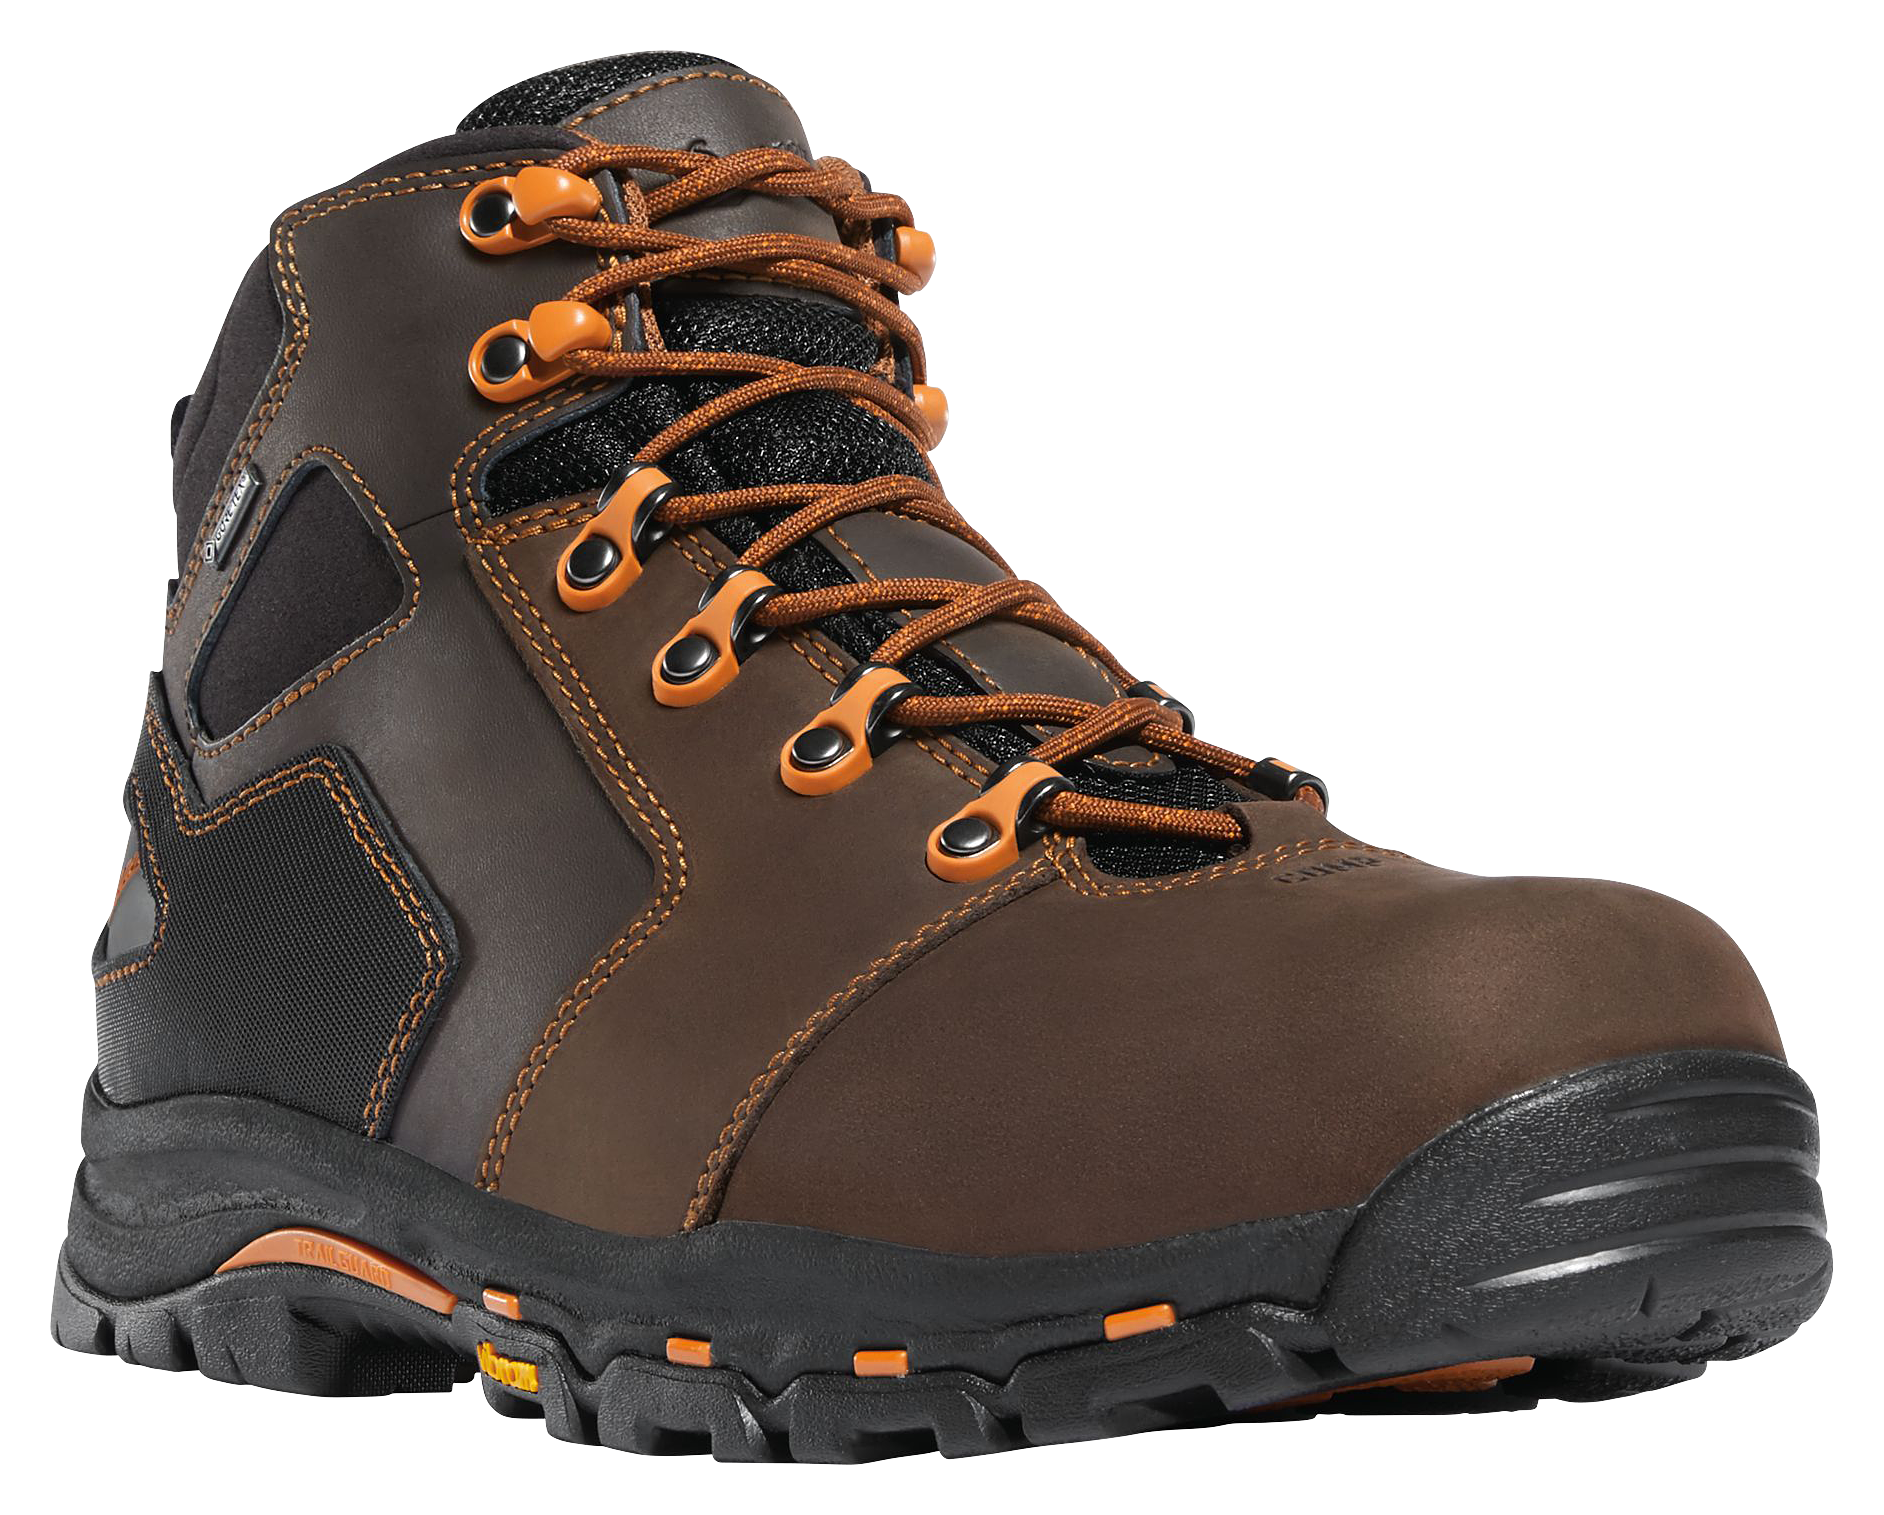 Danner Vicious 4.5'' GORE-TEX EH Work Boots for Men - Brown/Orange - 8.5M